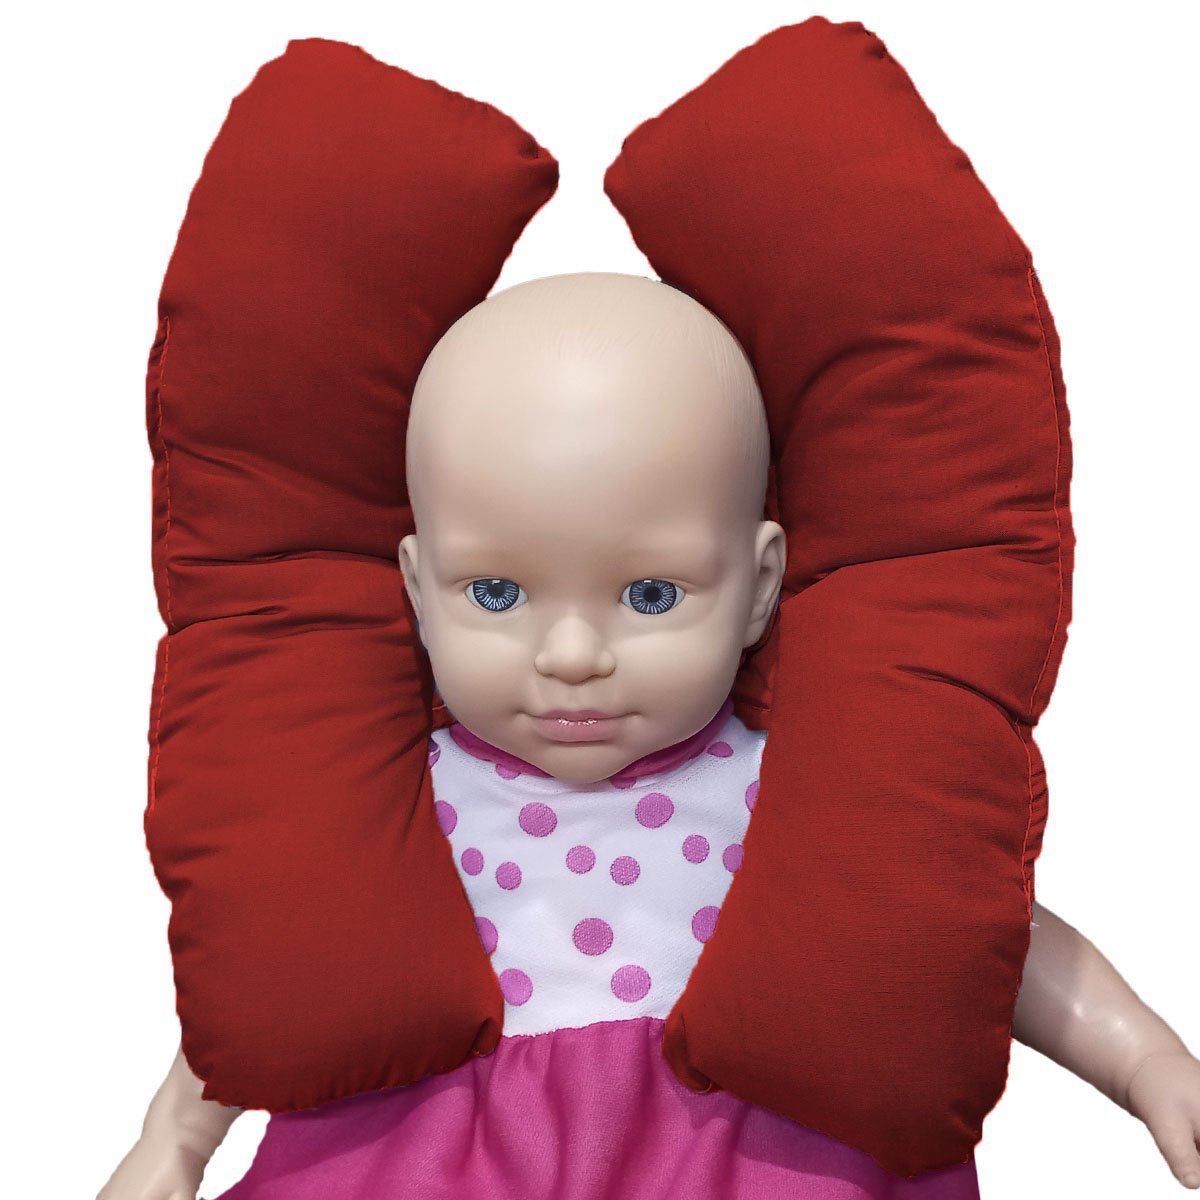 Apoio De Cabeça No Bebê Conforto 0-24 Meses Happy Line Almofada Apoio De Cabeça para Bebê Conforto 0